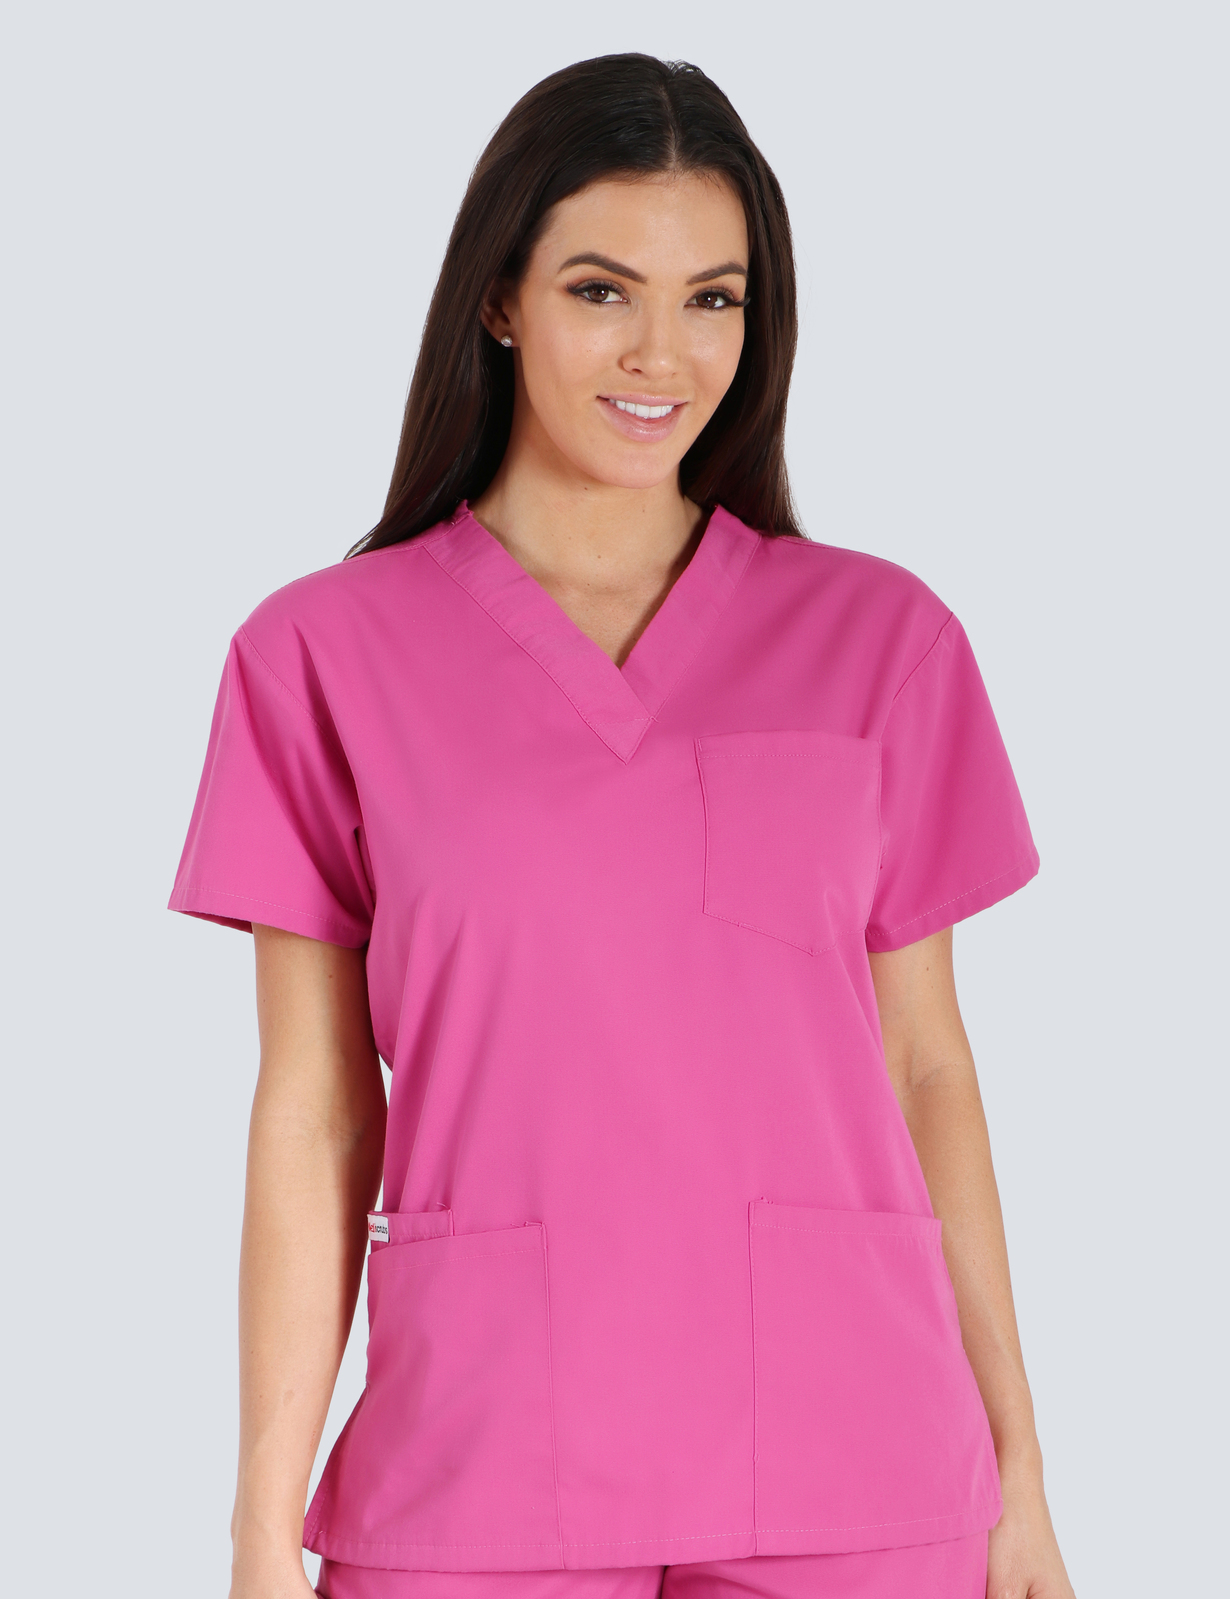 Queensland Children's Hospital Emergency Department Enrolled Nurse Uniform Top Bundle  (4 Pocket Top in Pink incl Logos)